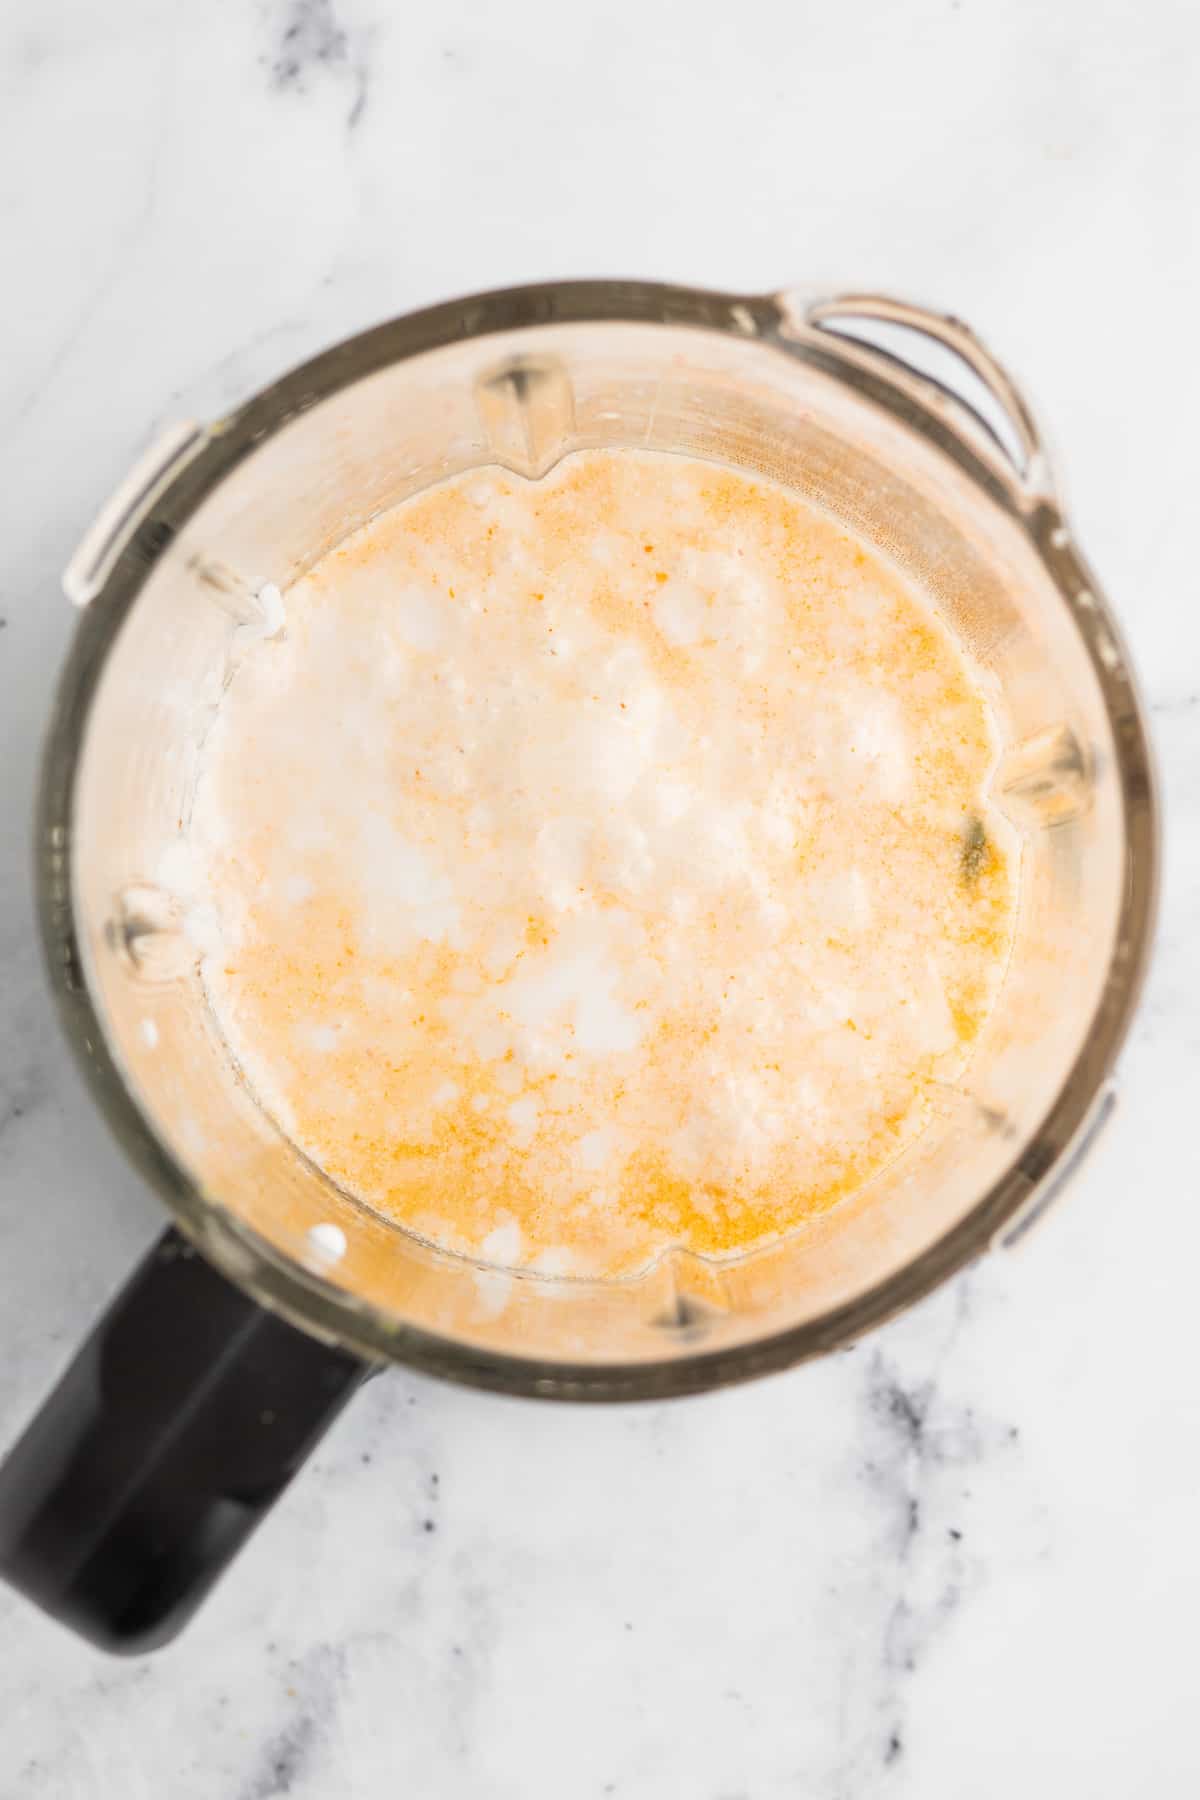 a blender with a light orange cream mixture